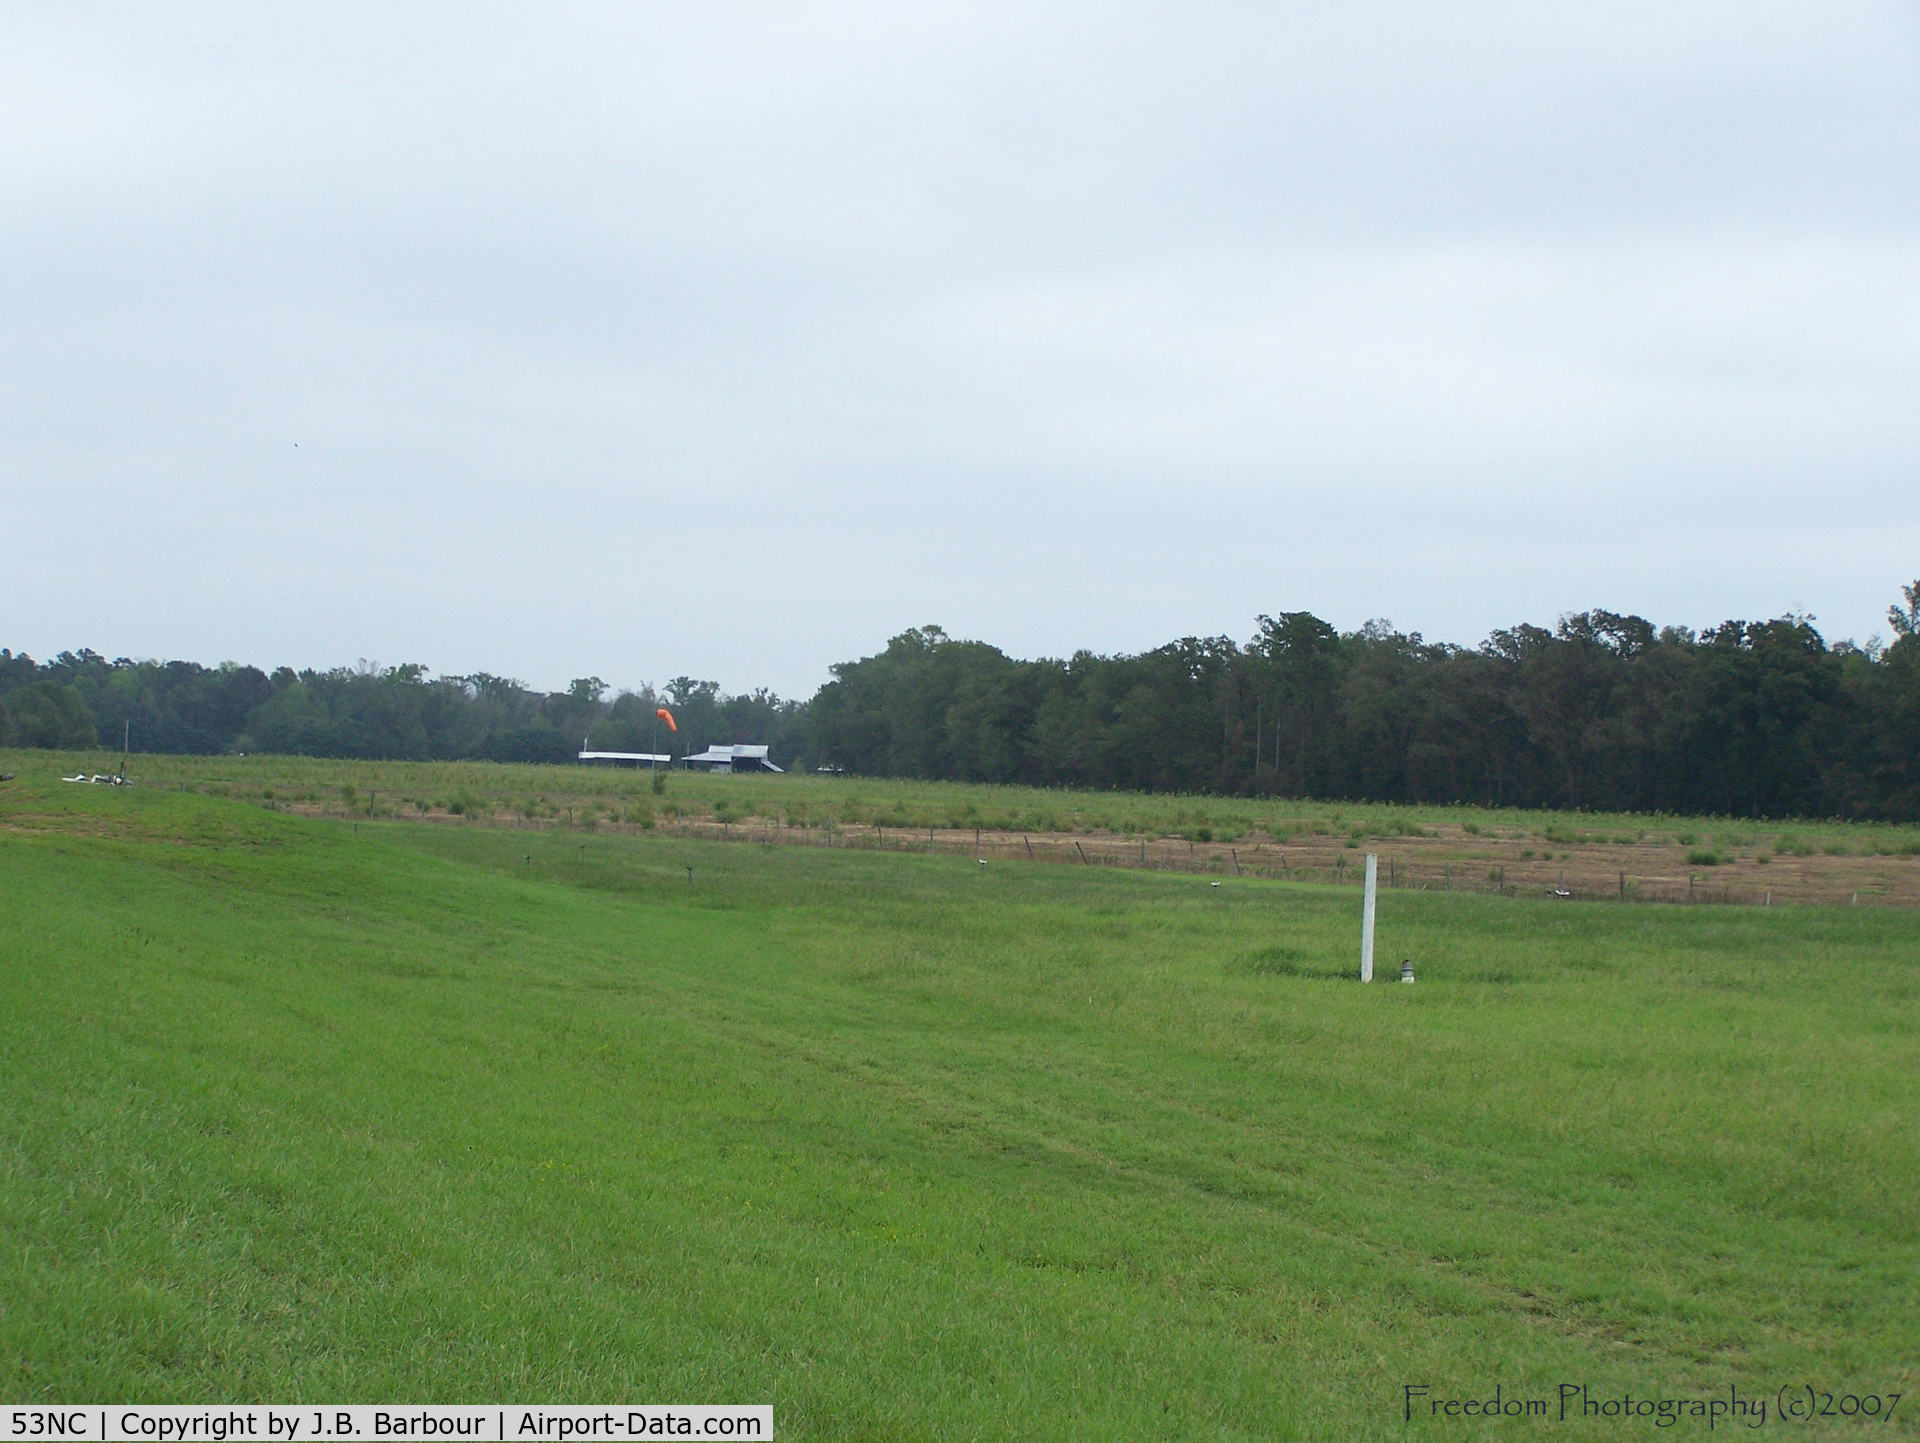 Mynatt Field Airport (53NC) - A farming location